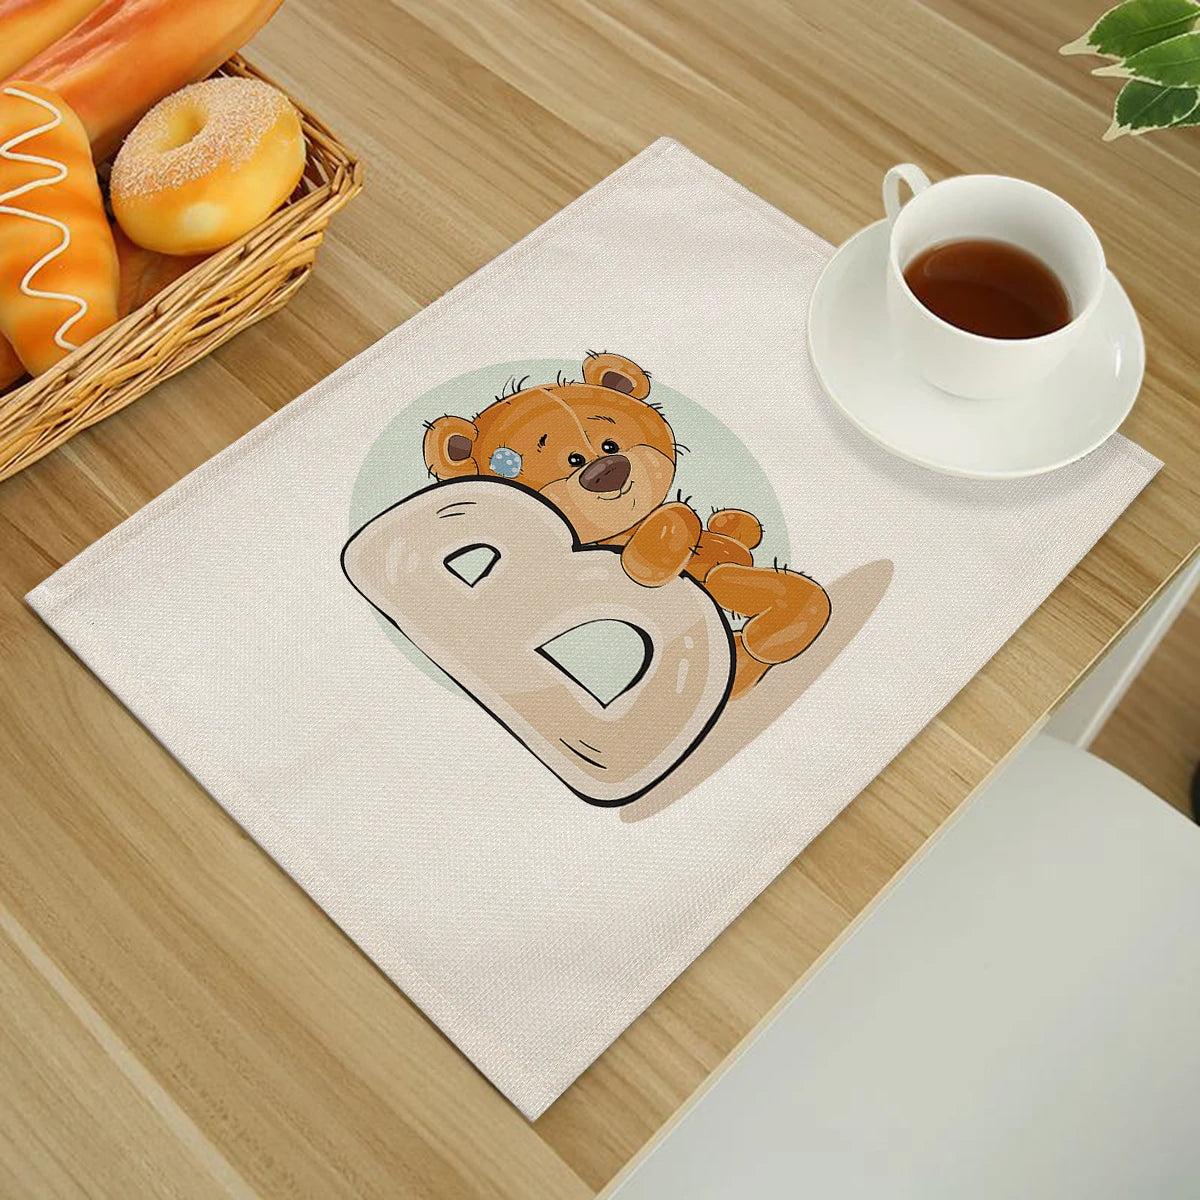 Cute Cartoon Animal Bear Kitchen Placemat for Children Kids English Alphabet A-Z Print Cotton Linen Dining Table Mats Coaster